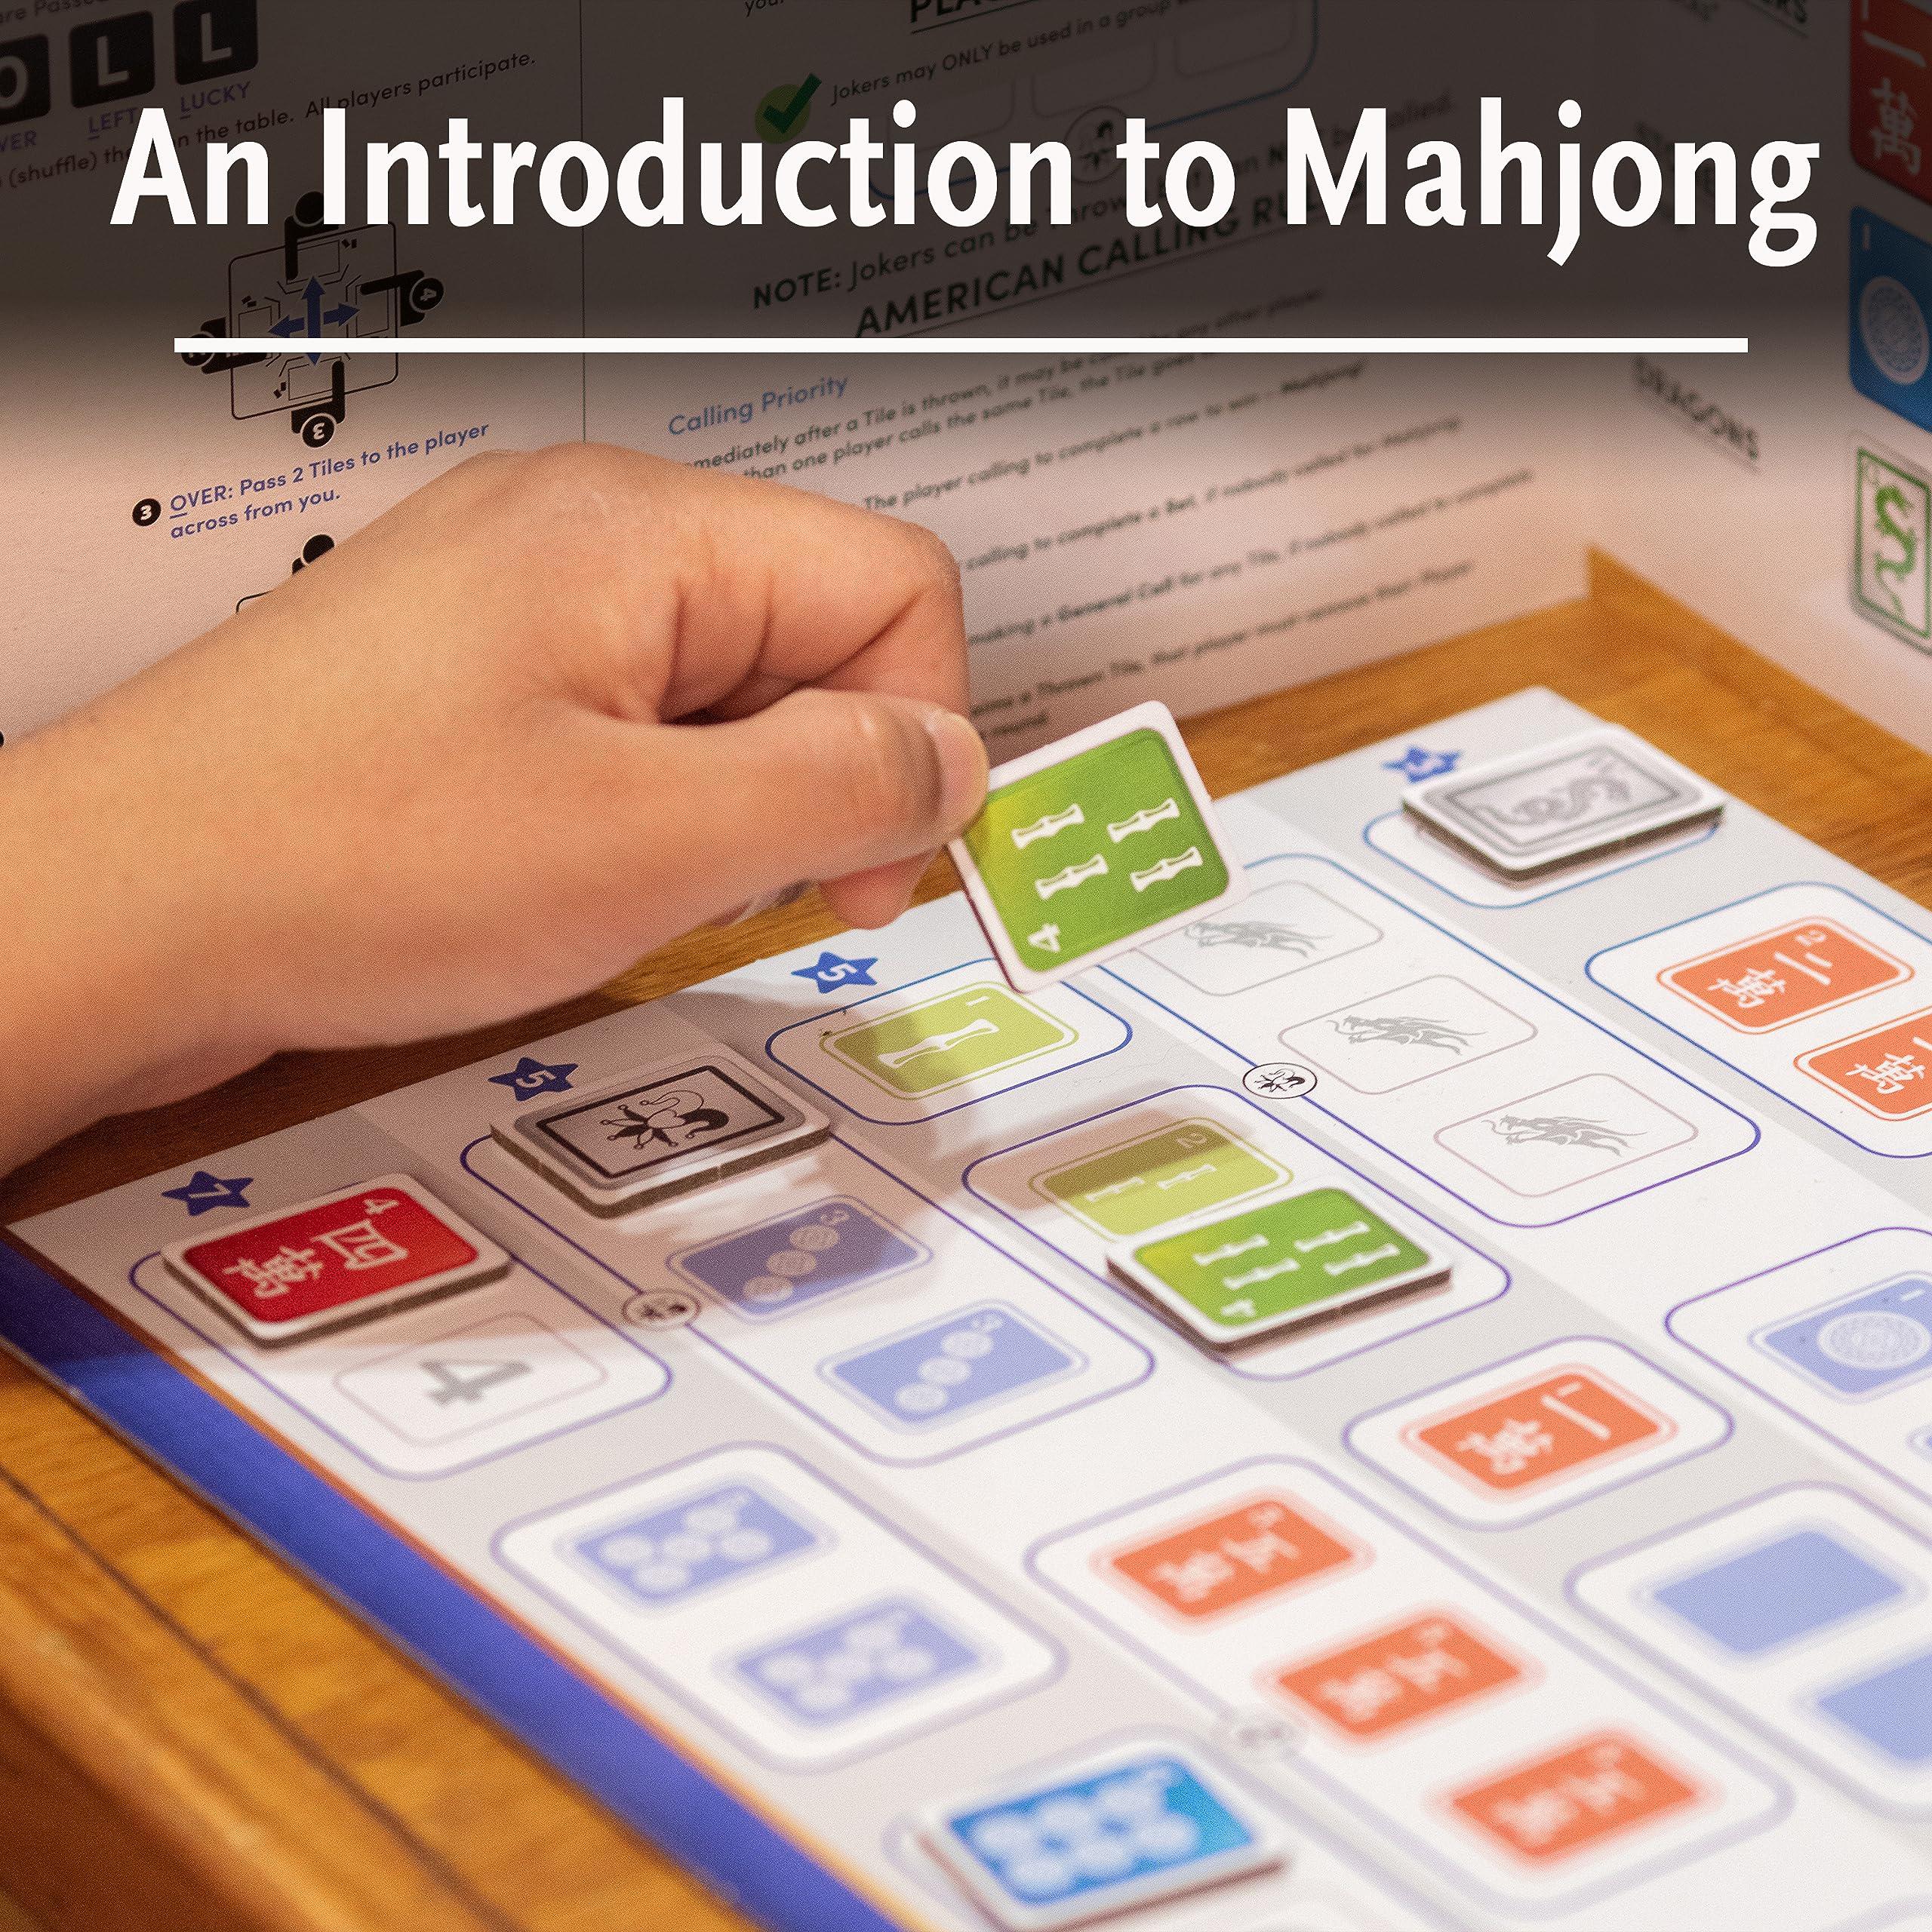 Ravensburger thinkfun meet mahjong: the family board game for 4 players that teaches the basics of mahjong!